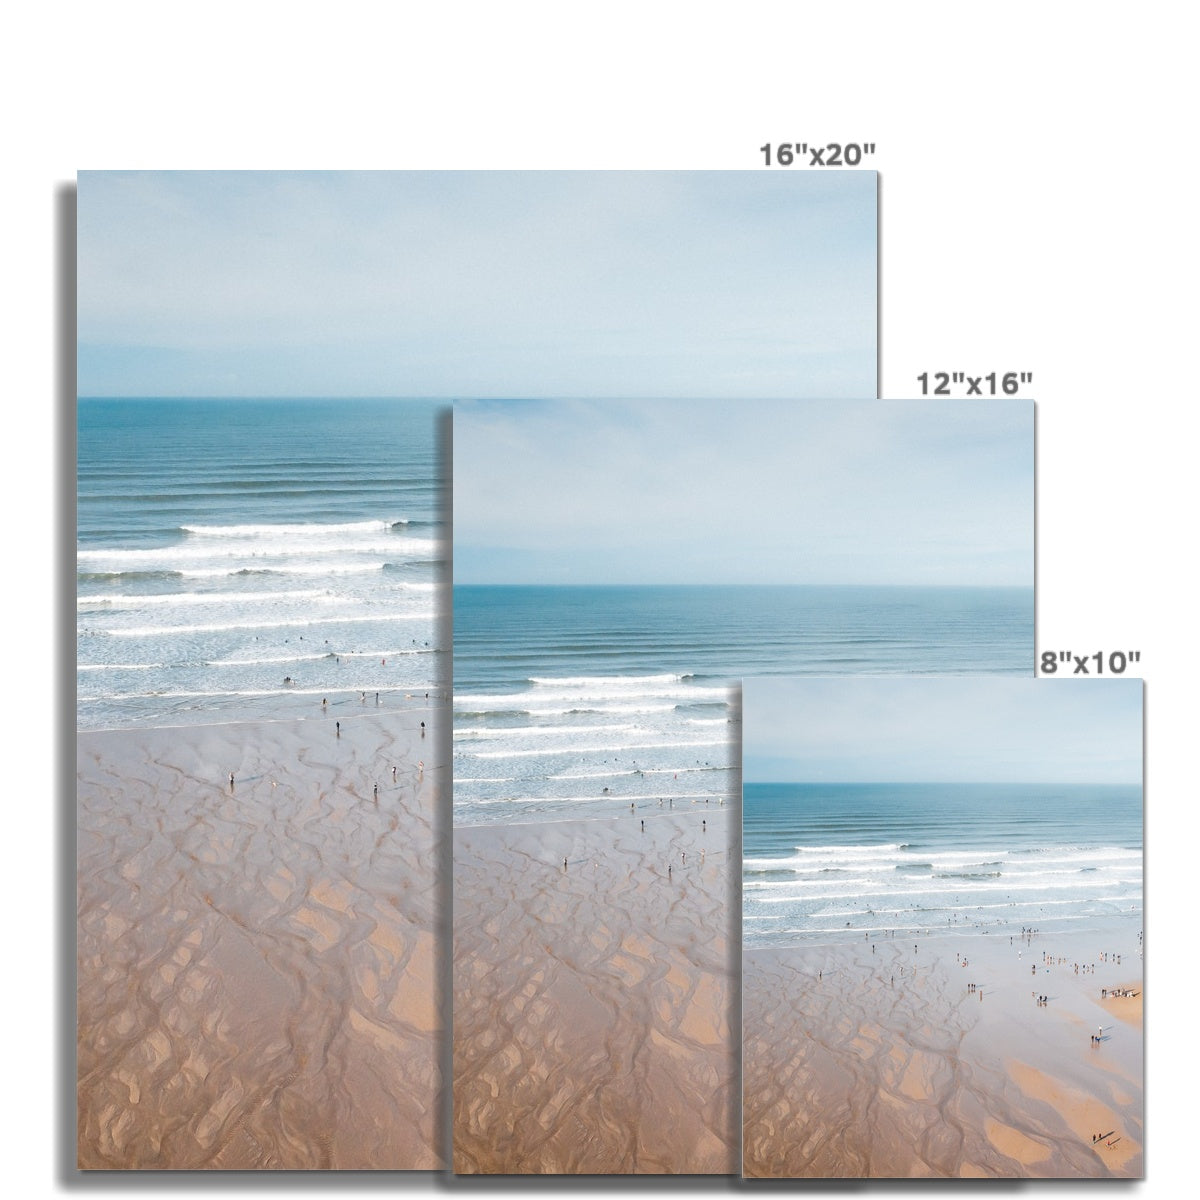 polzeath beach picture sizes